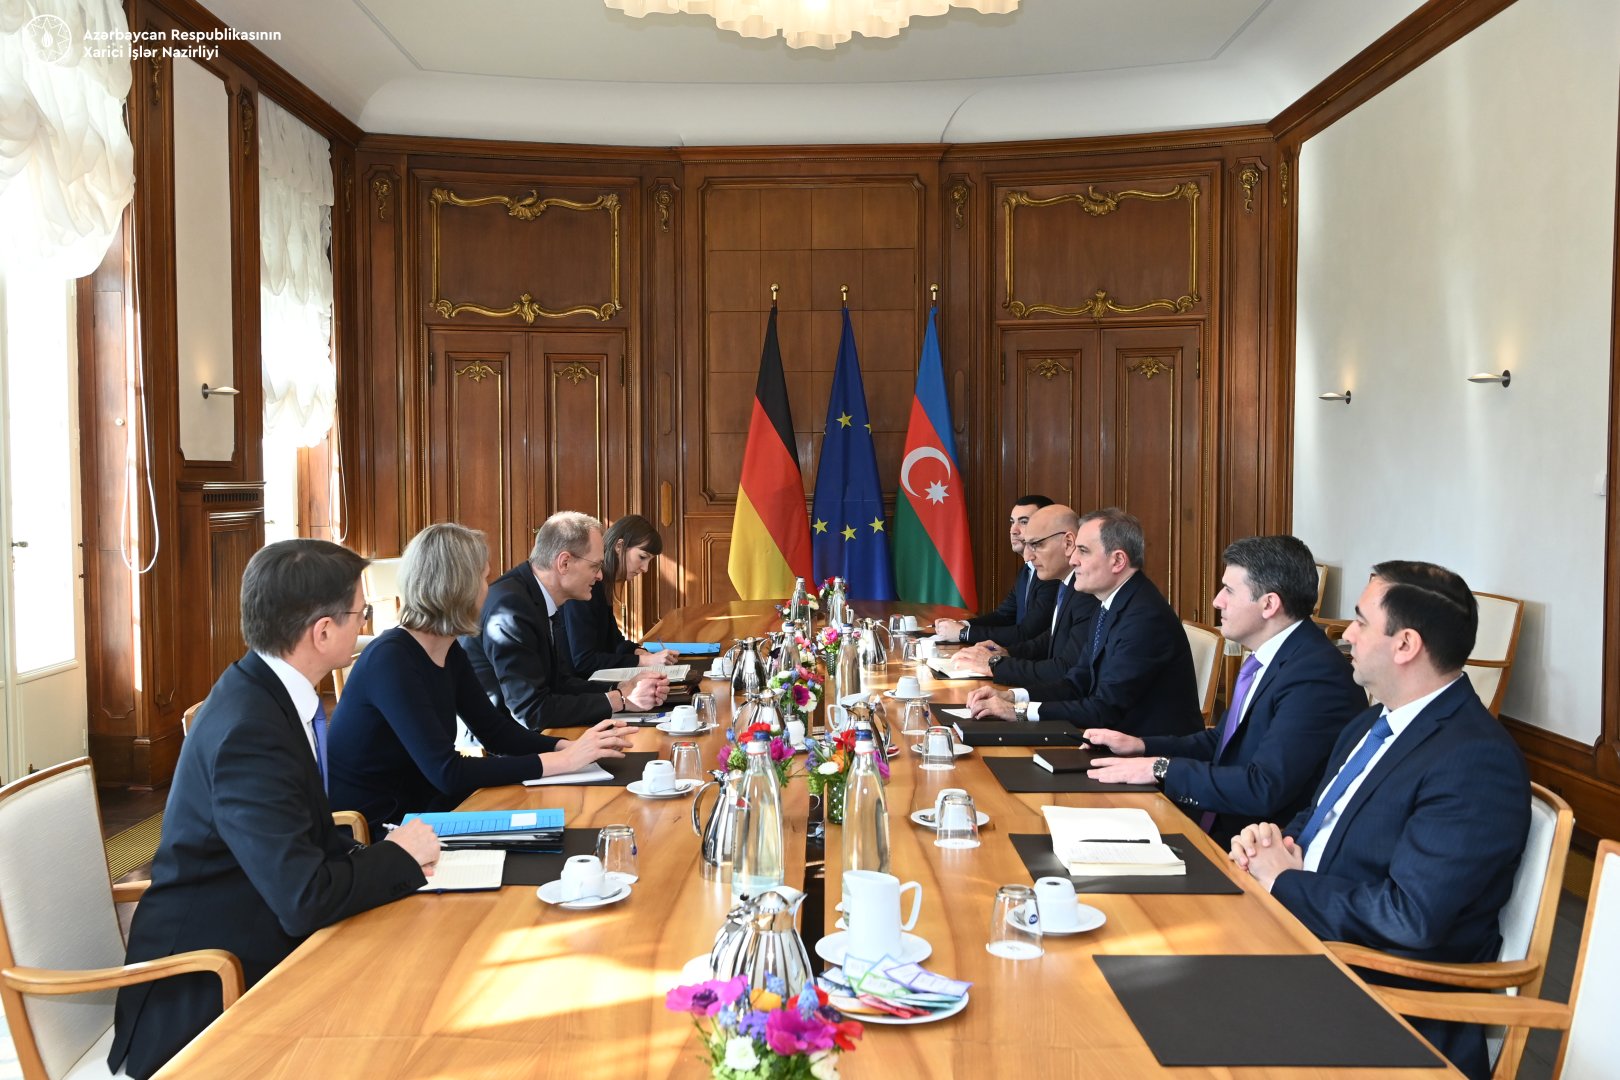 Azerbaijani FM, German FFO State Secretary go over peace deal prospects